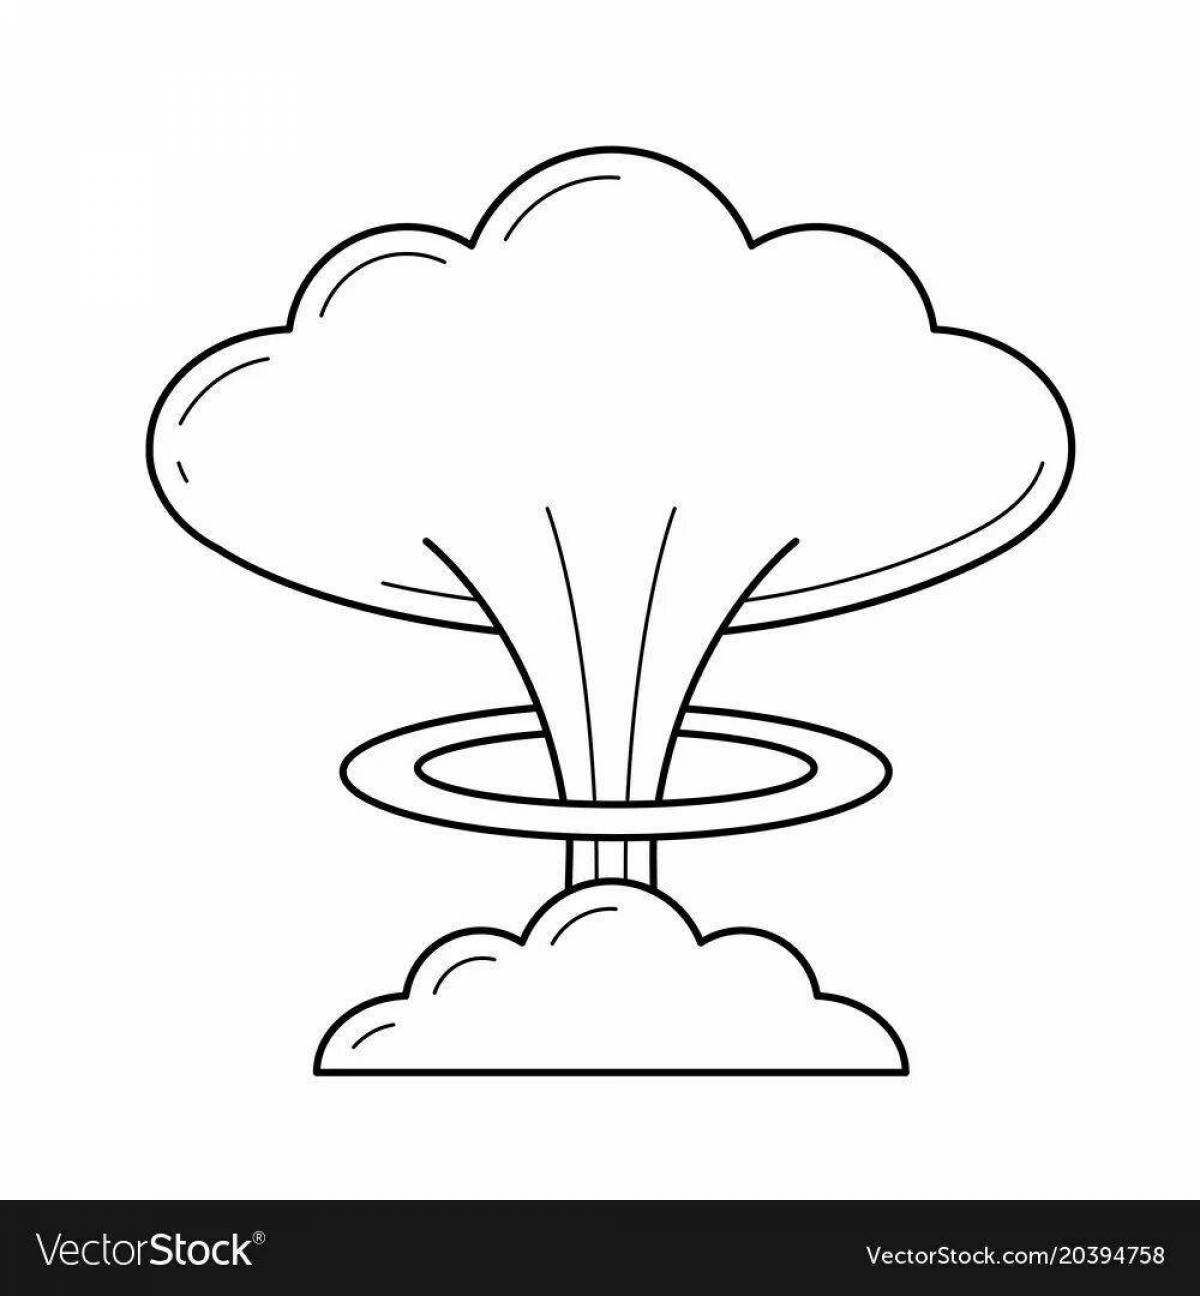 Atomic bomb #9